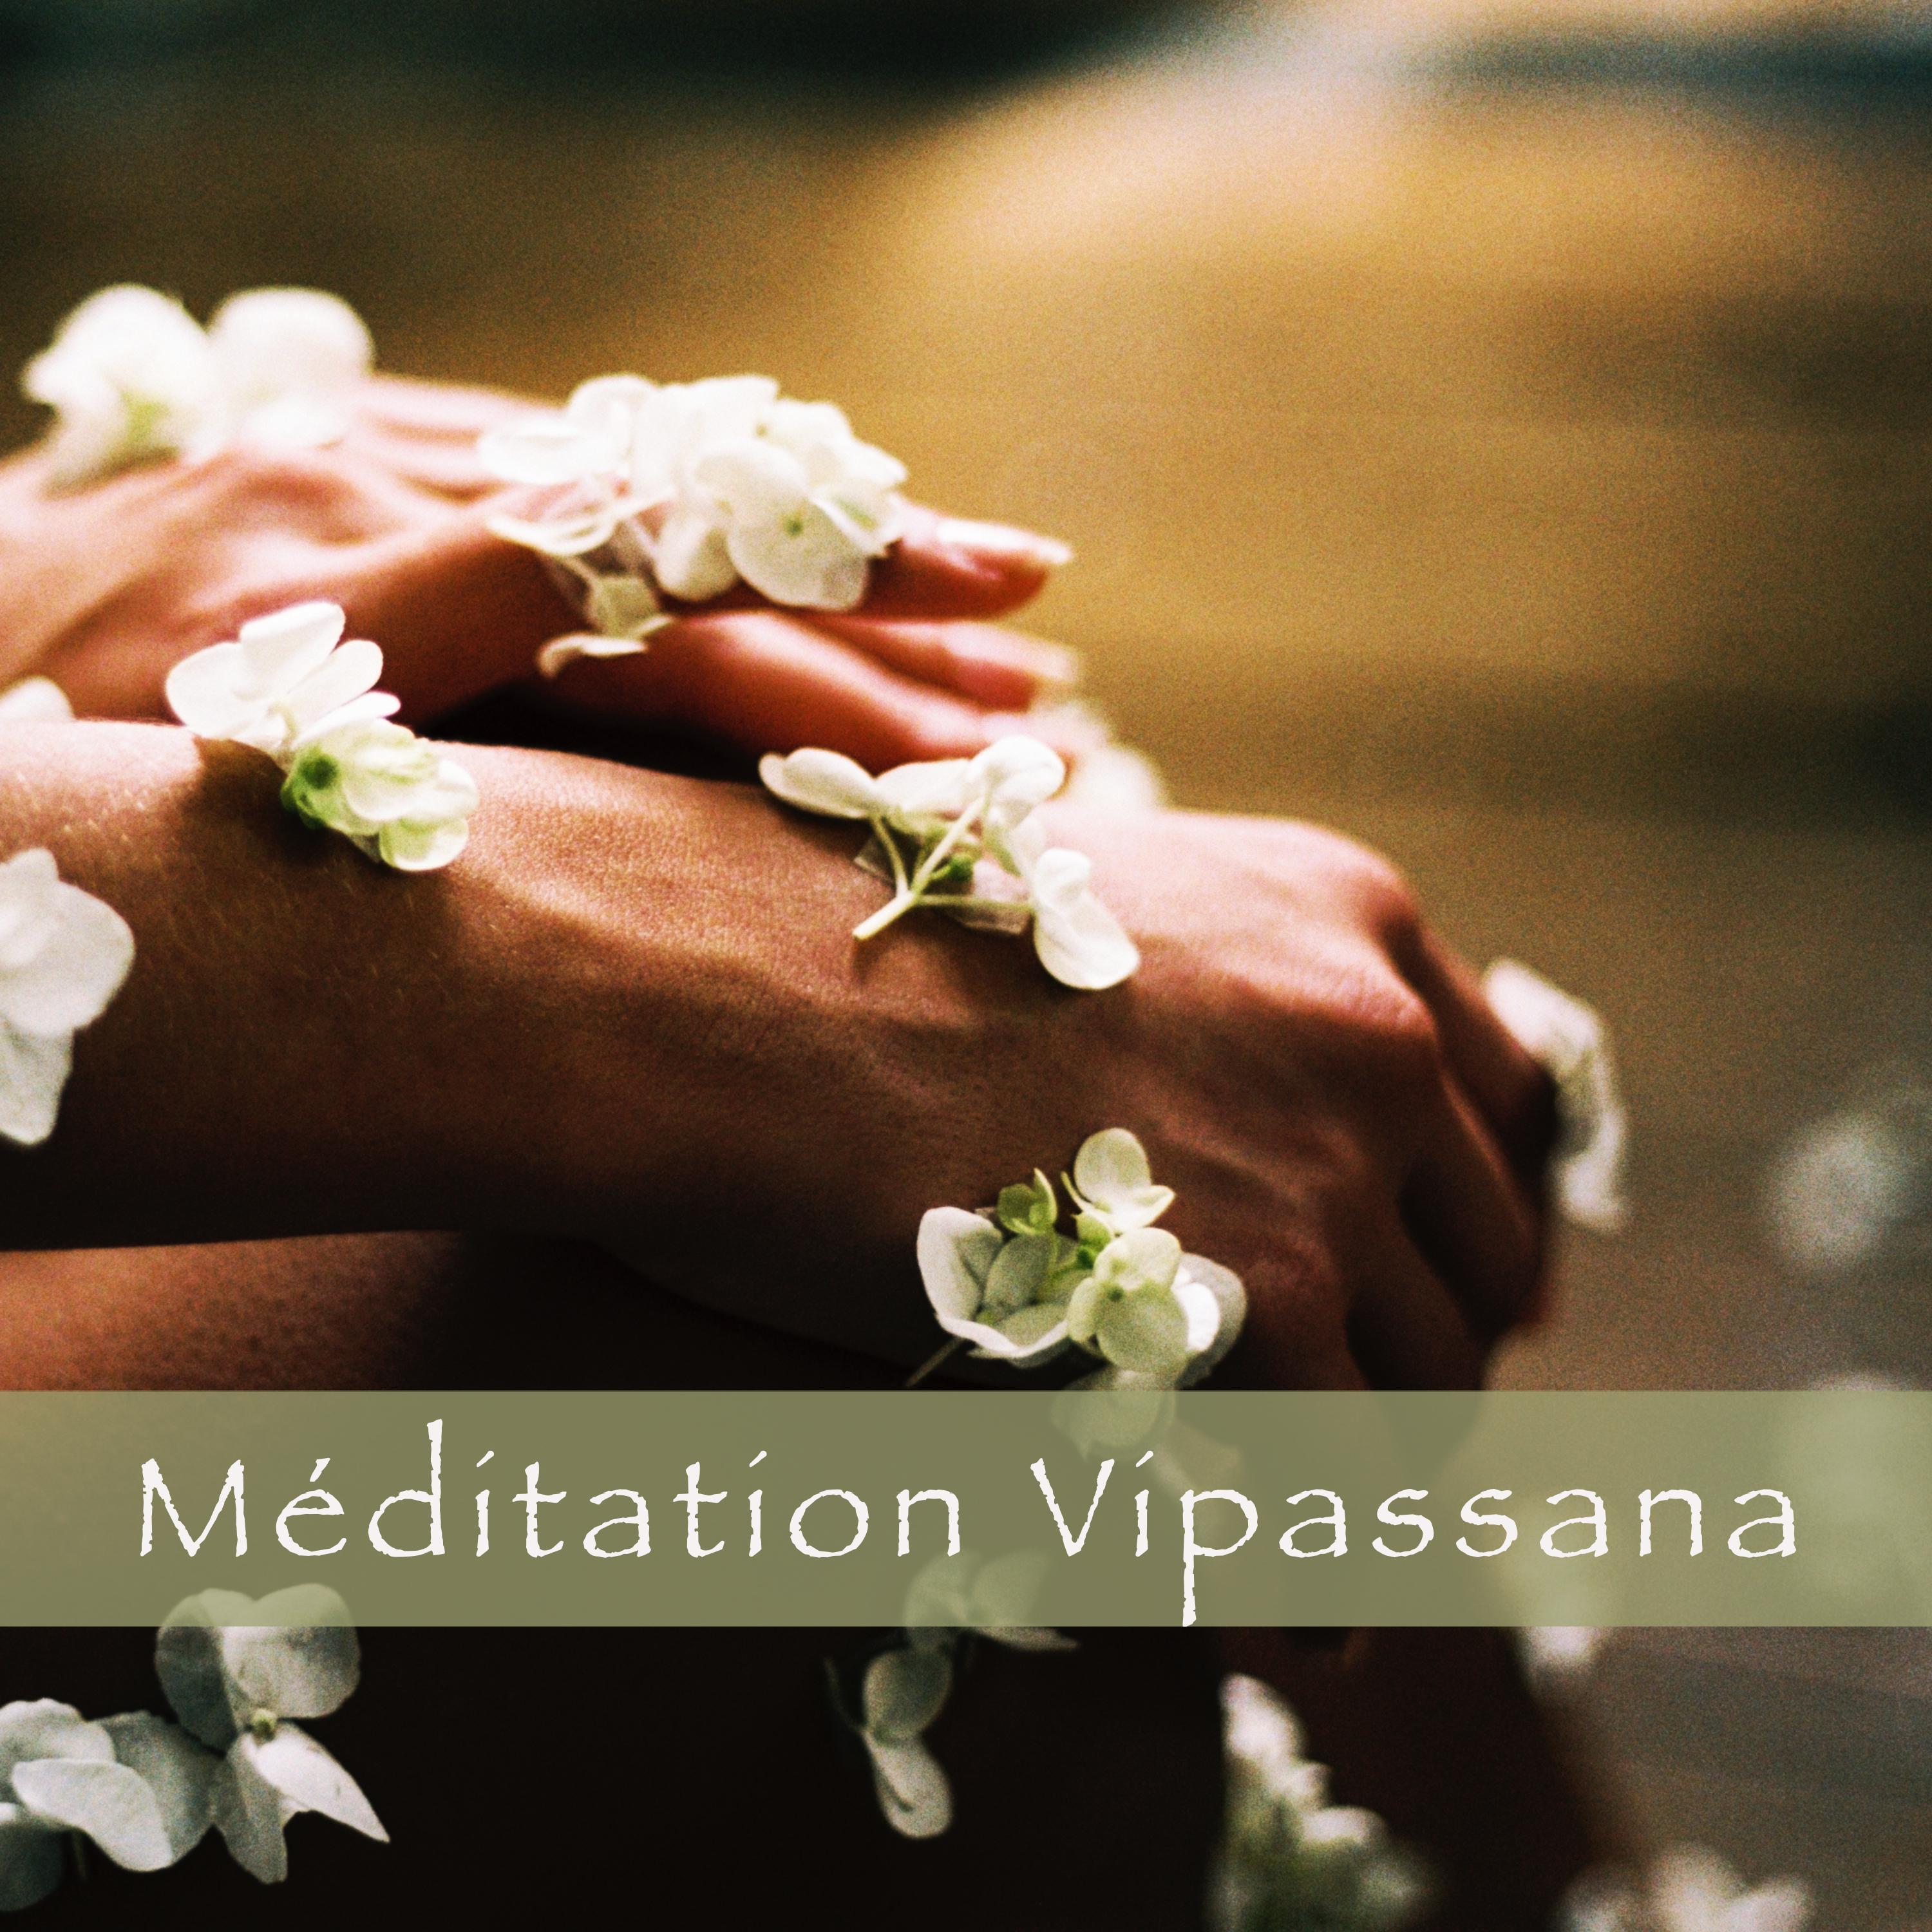 Méditation vipassana